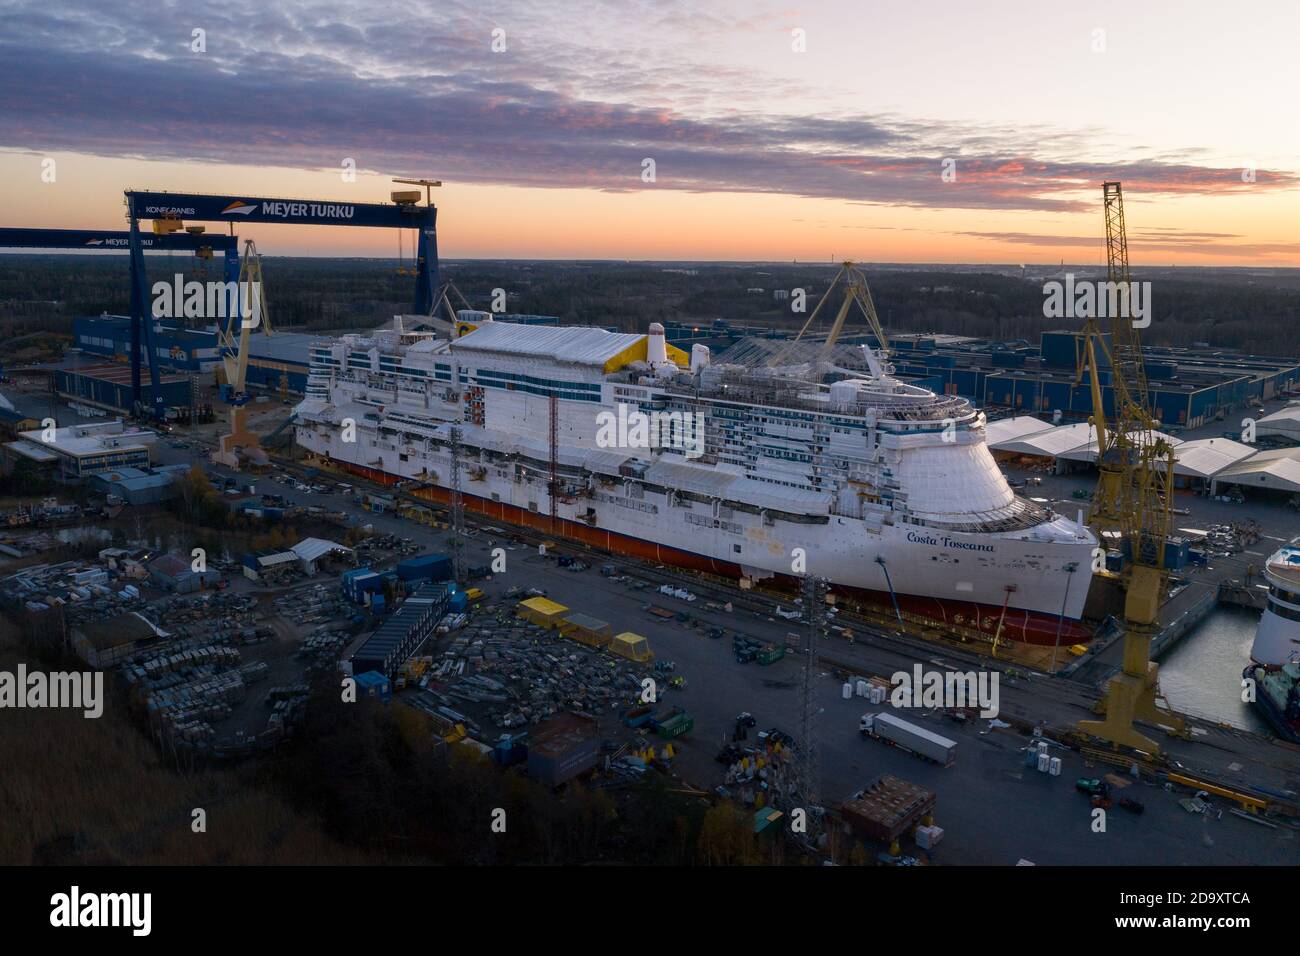 TURKU, FINLAND - 06/11/2020: Costa Toscana cruise vessel being built in Meyer Turku shipyard Stock Photo